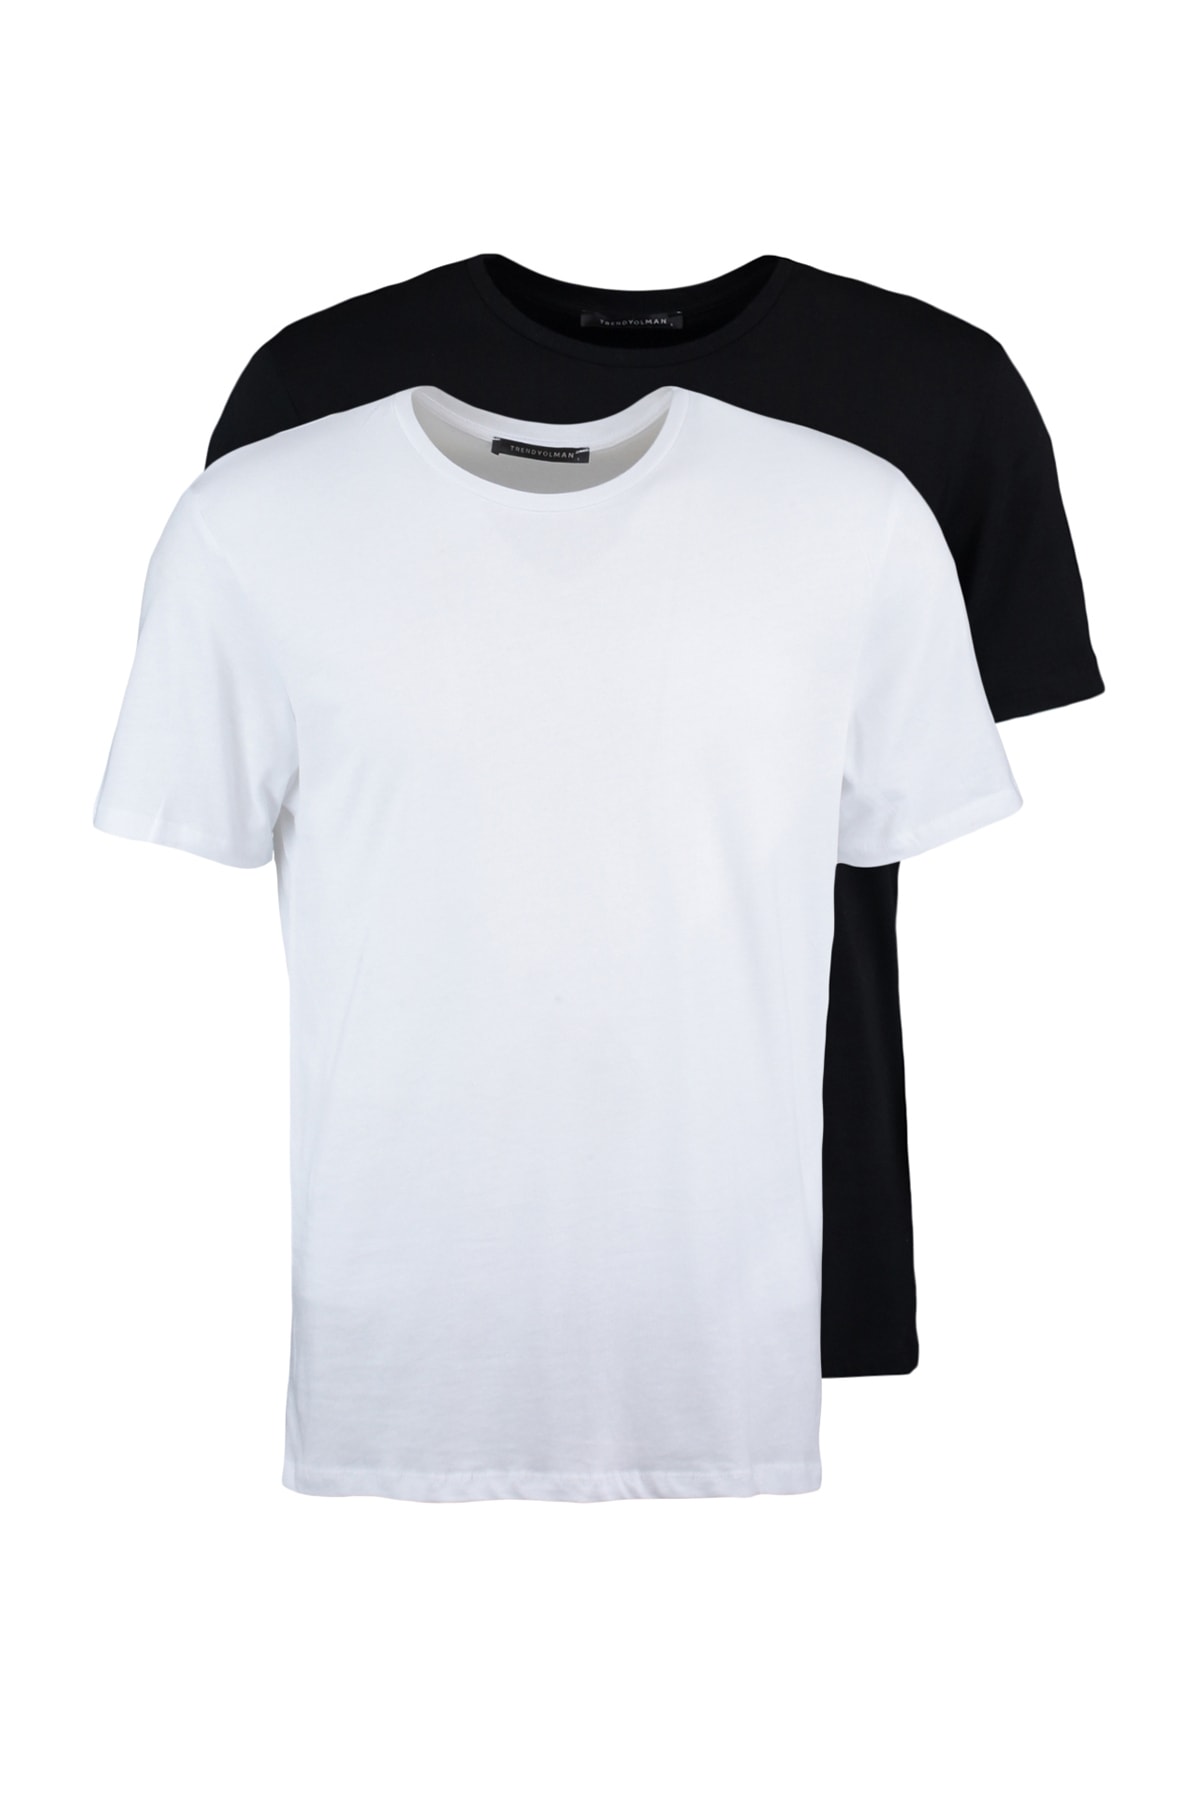 Trendyol Collection T-Shirt - Multi-color - Slim fit